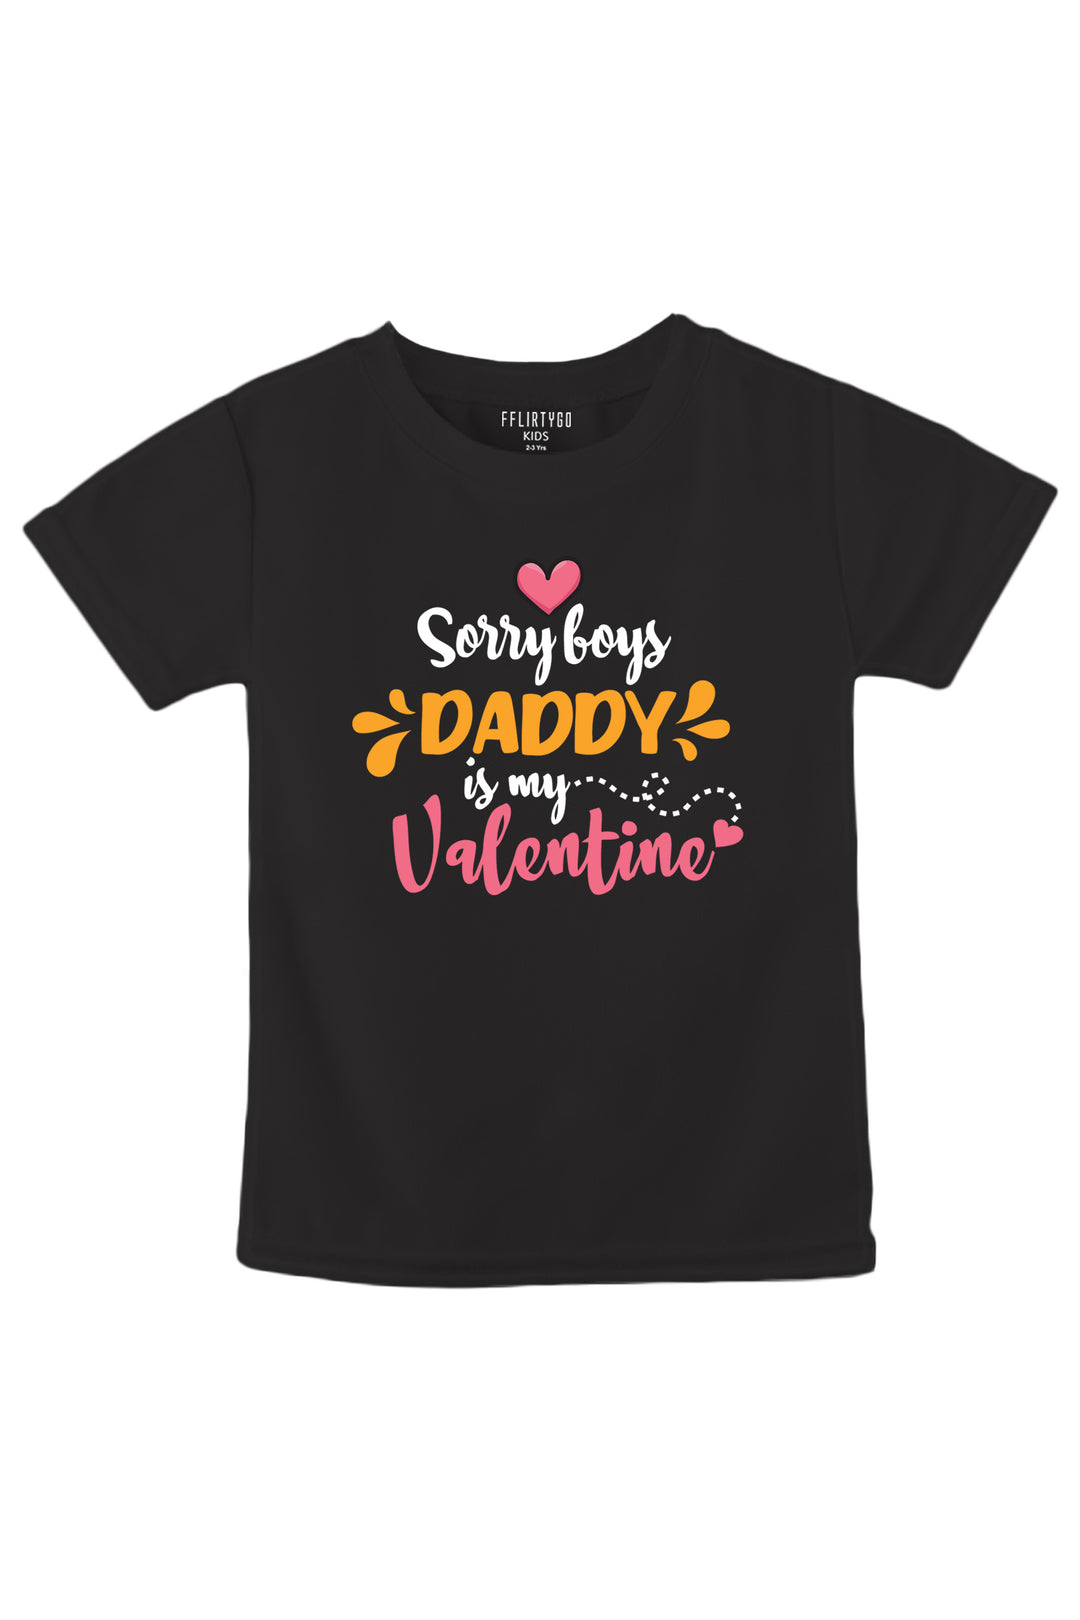 Sorry Boys Baddy Is My Valentine Kids T Shirt